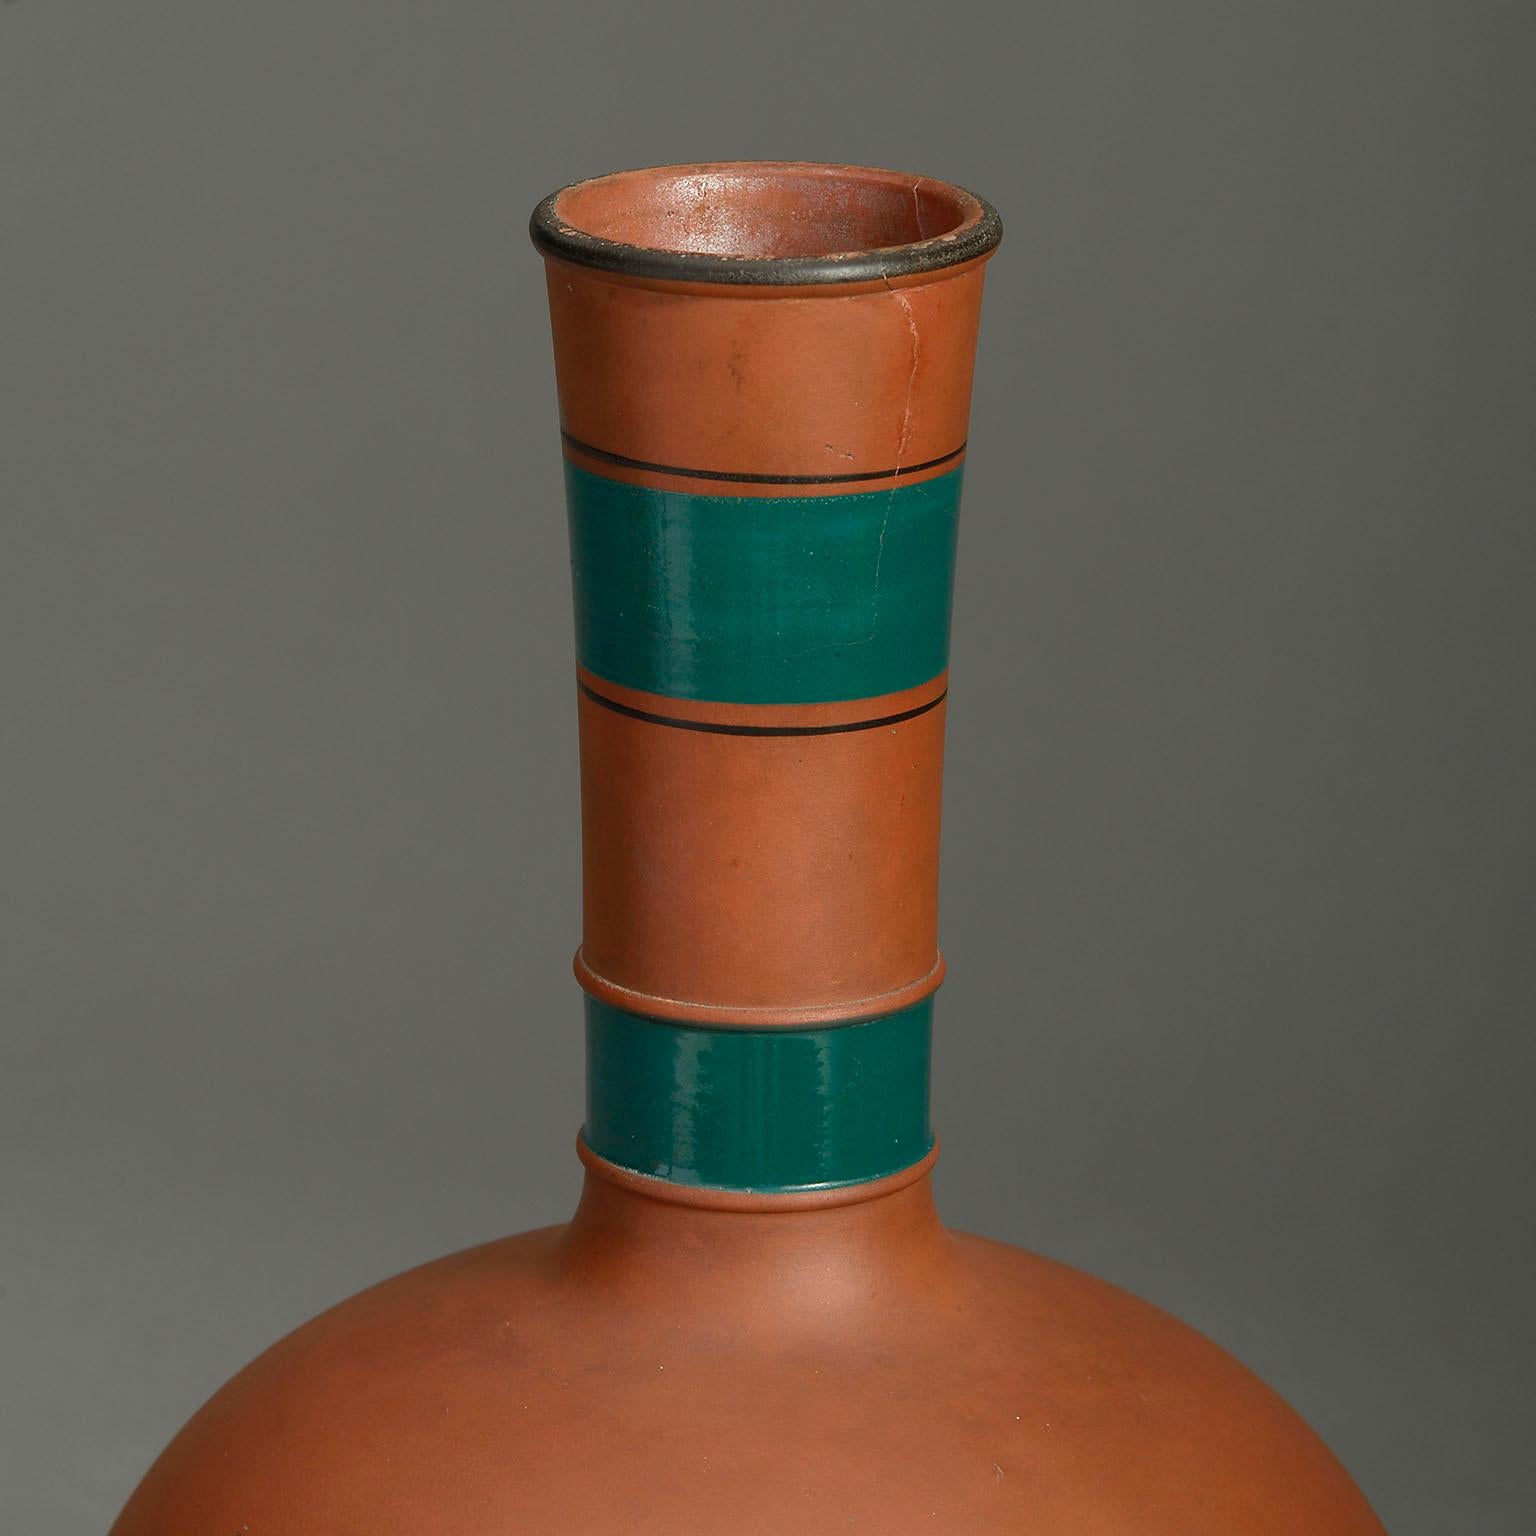 Aesthetic Movement 20th Century Terracotta Bottle Vase in the Classical Taste For Sale